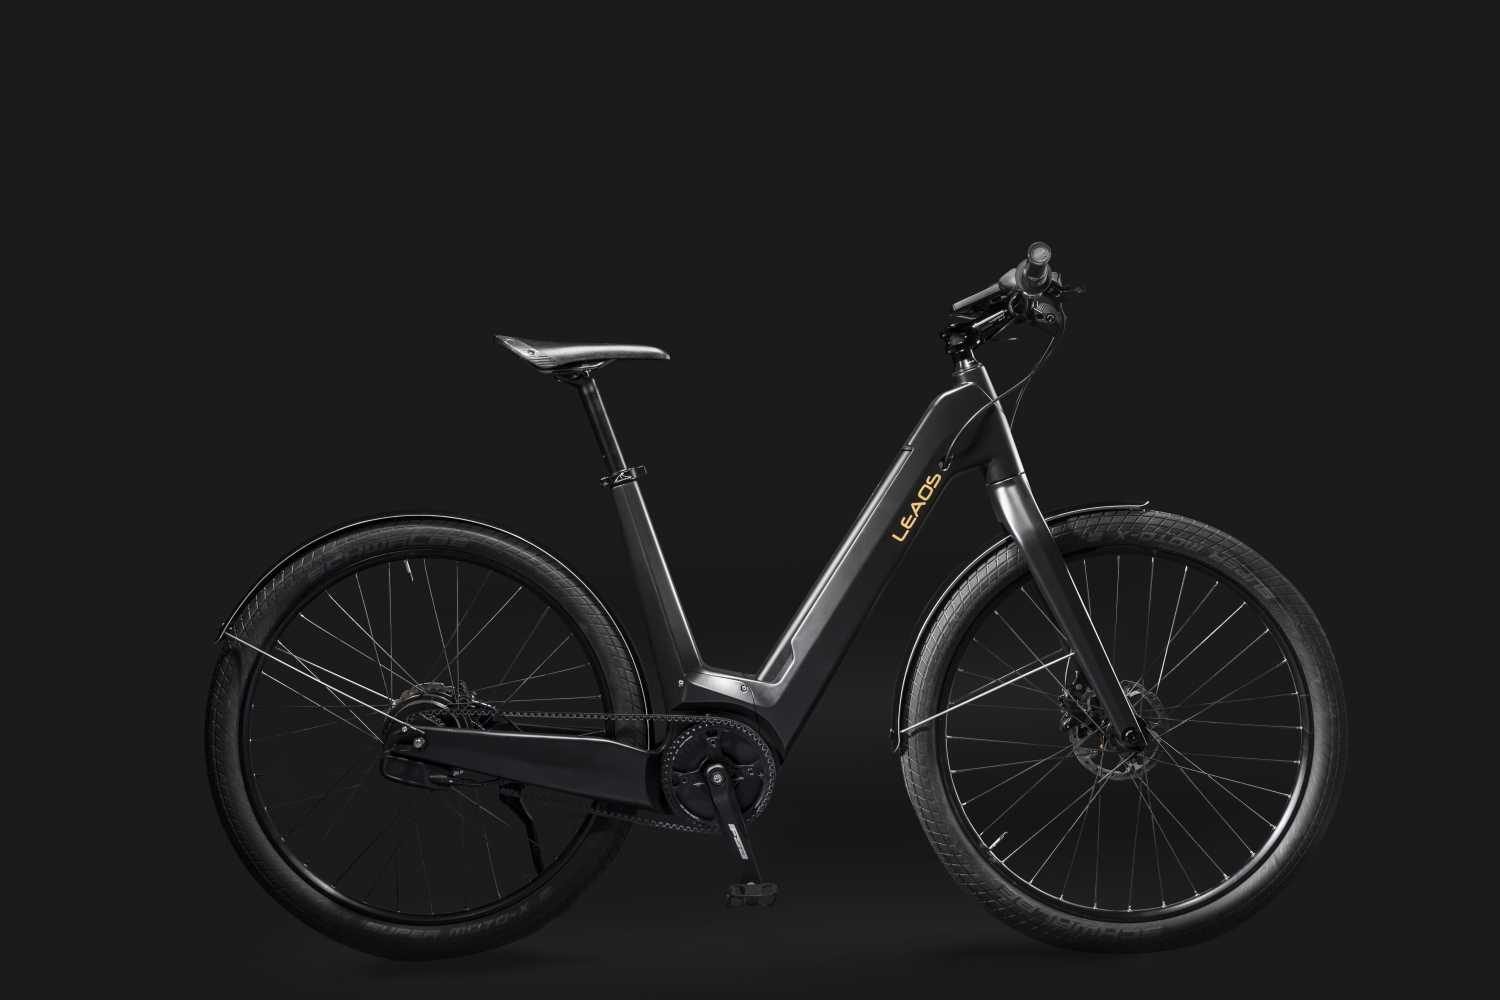 LEAOS 2018 Carbon Urban E-Bike